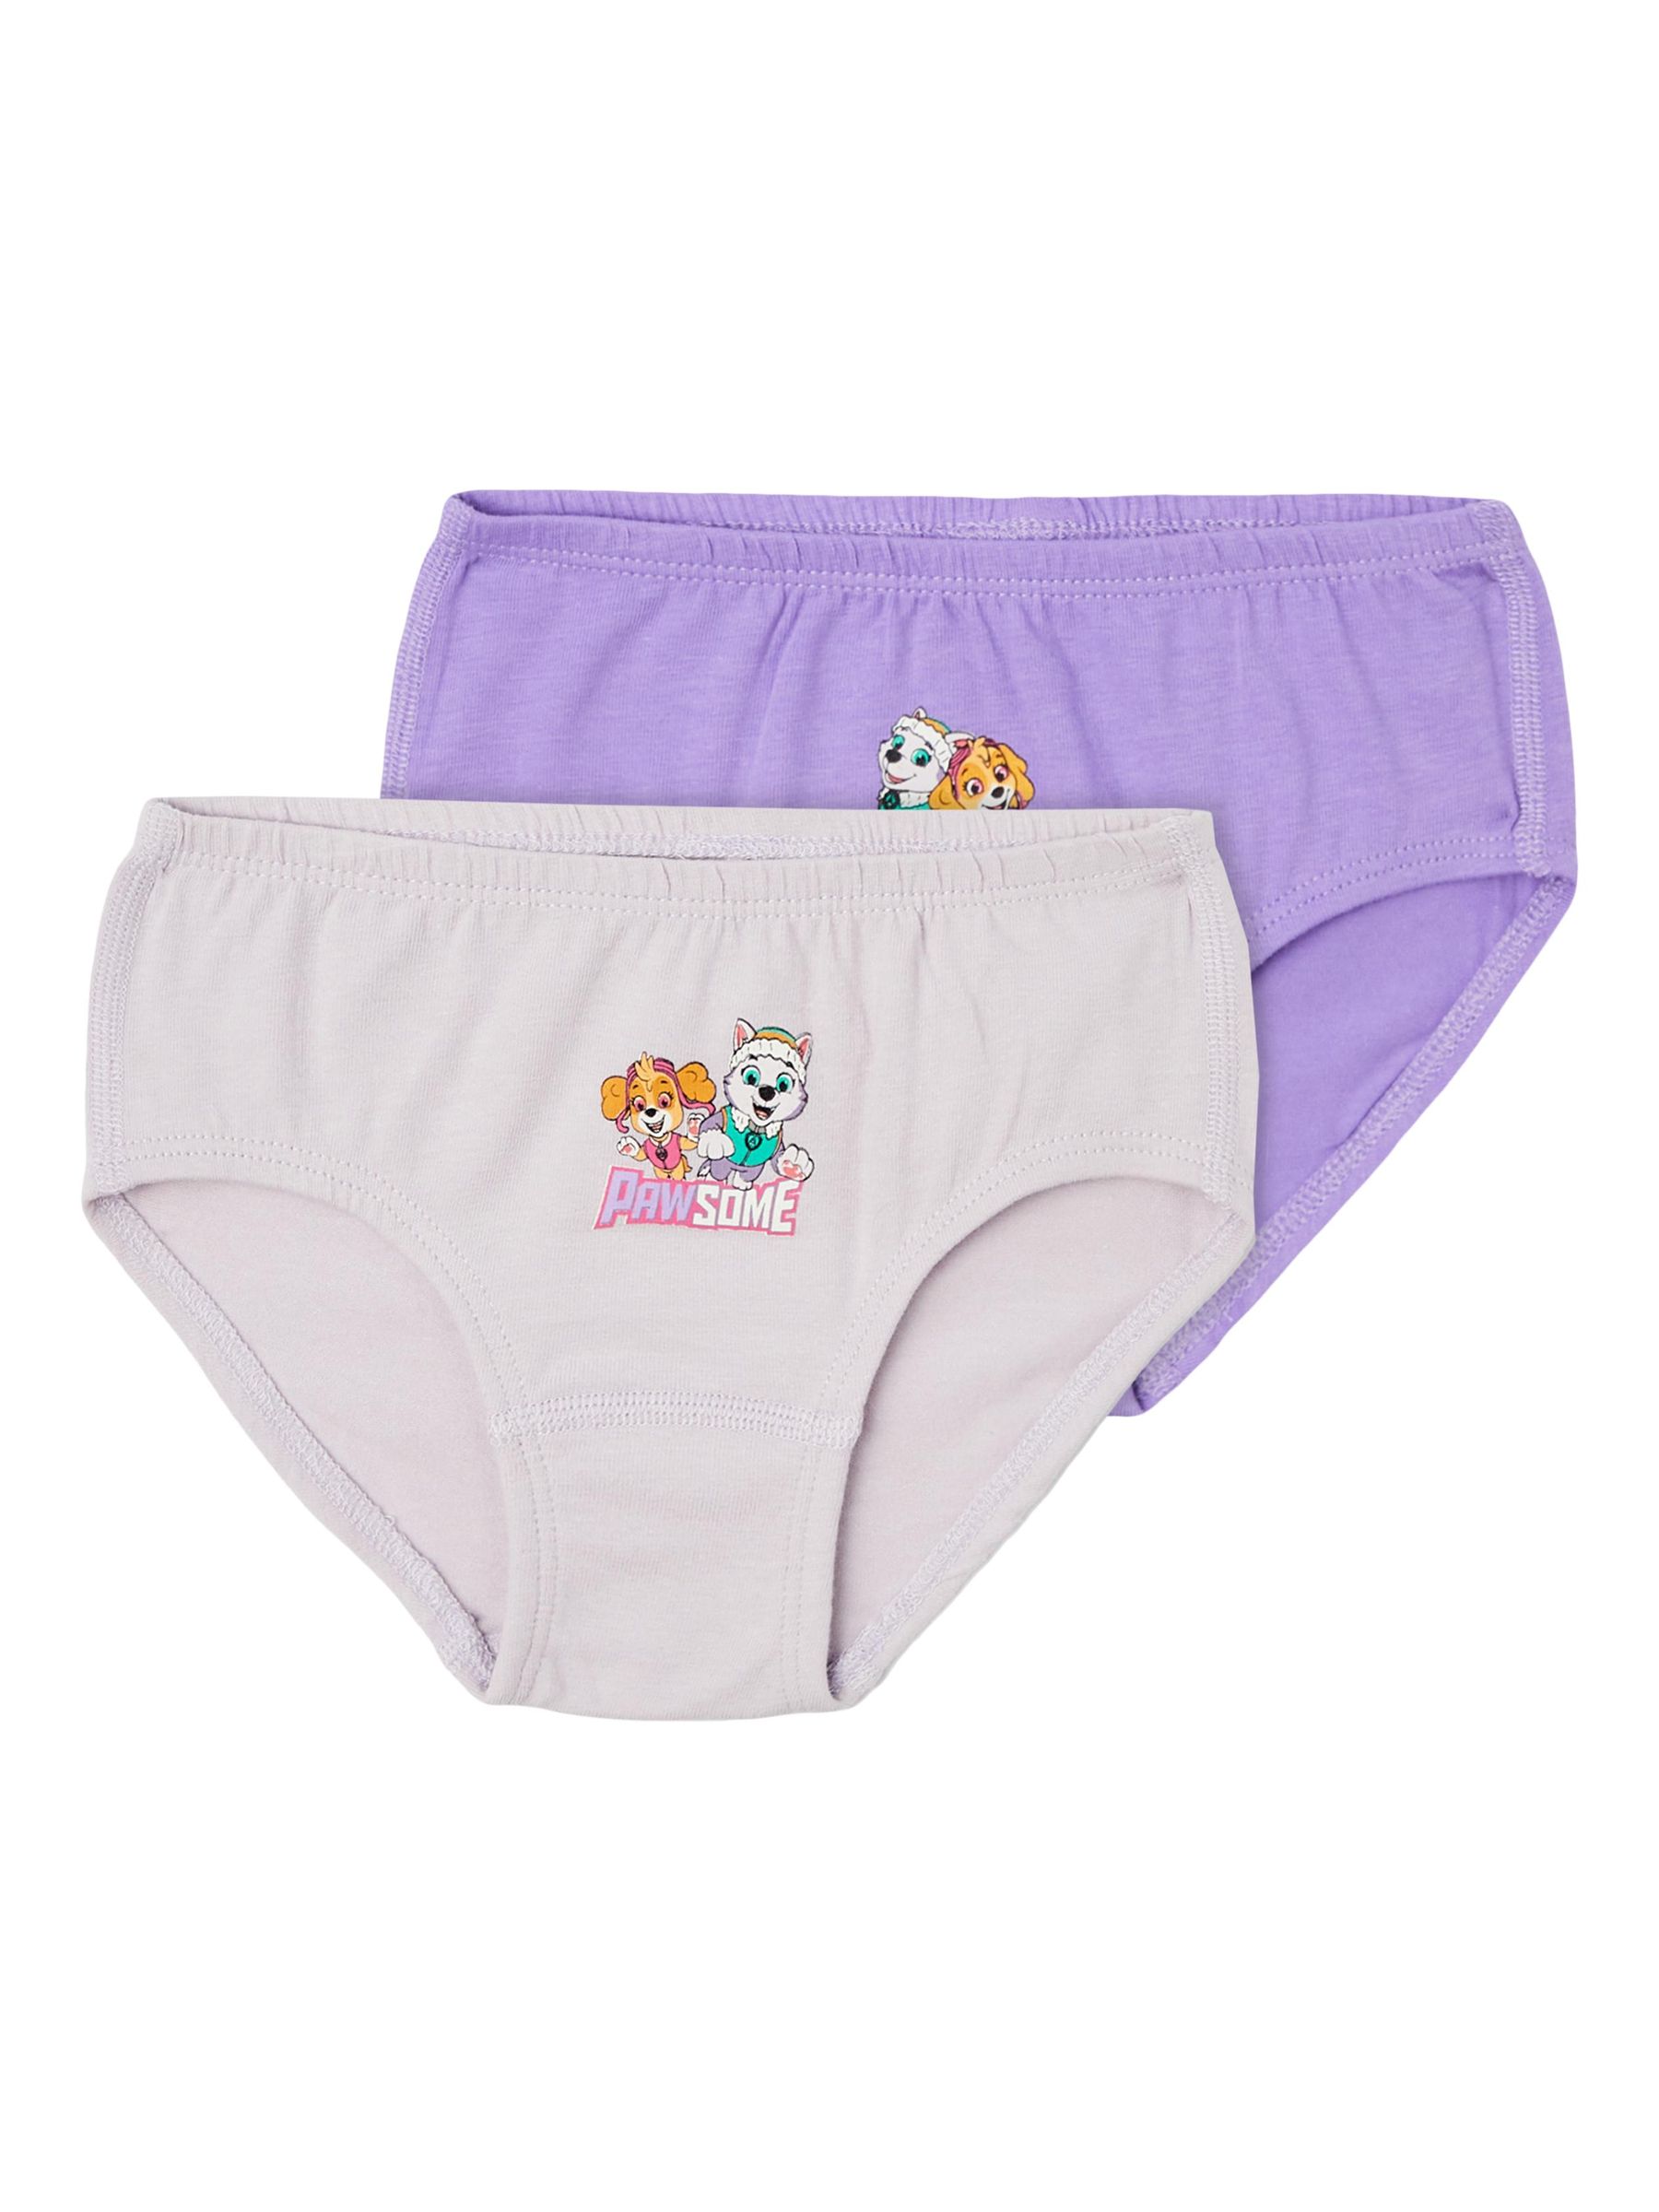 2 PACK PAW PATROL BRIEFS - Toddler Girls', Purple